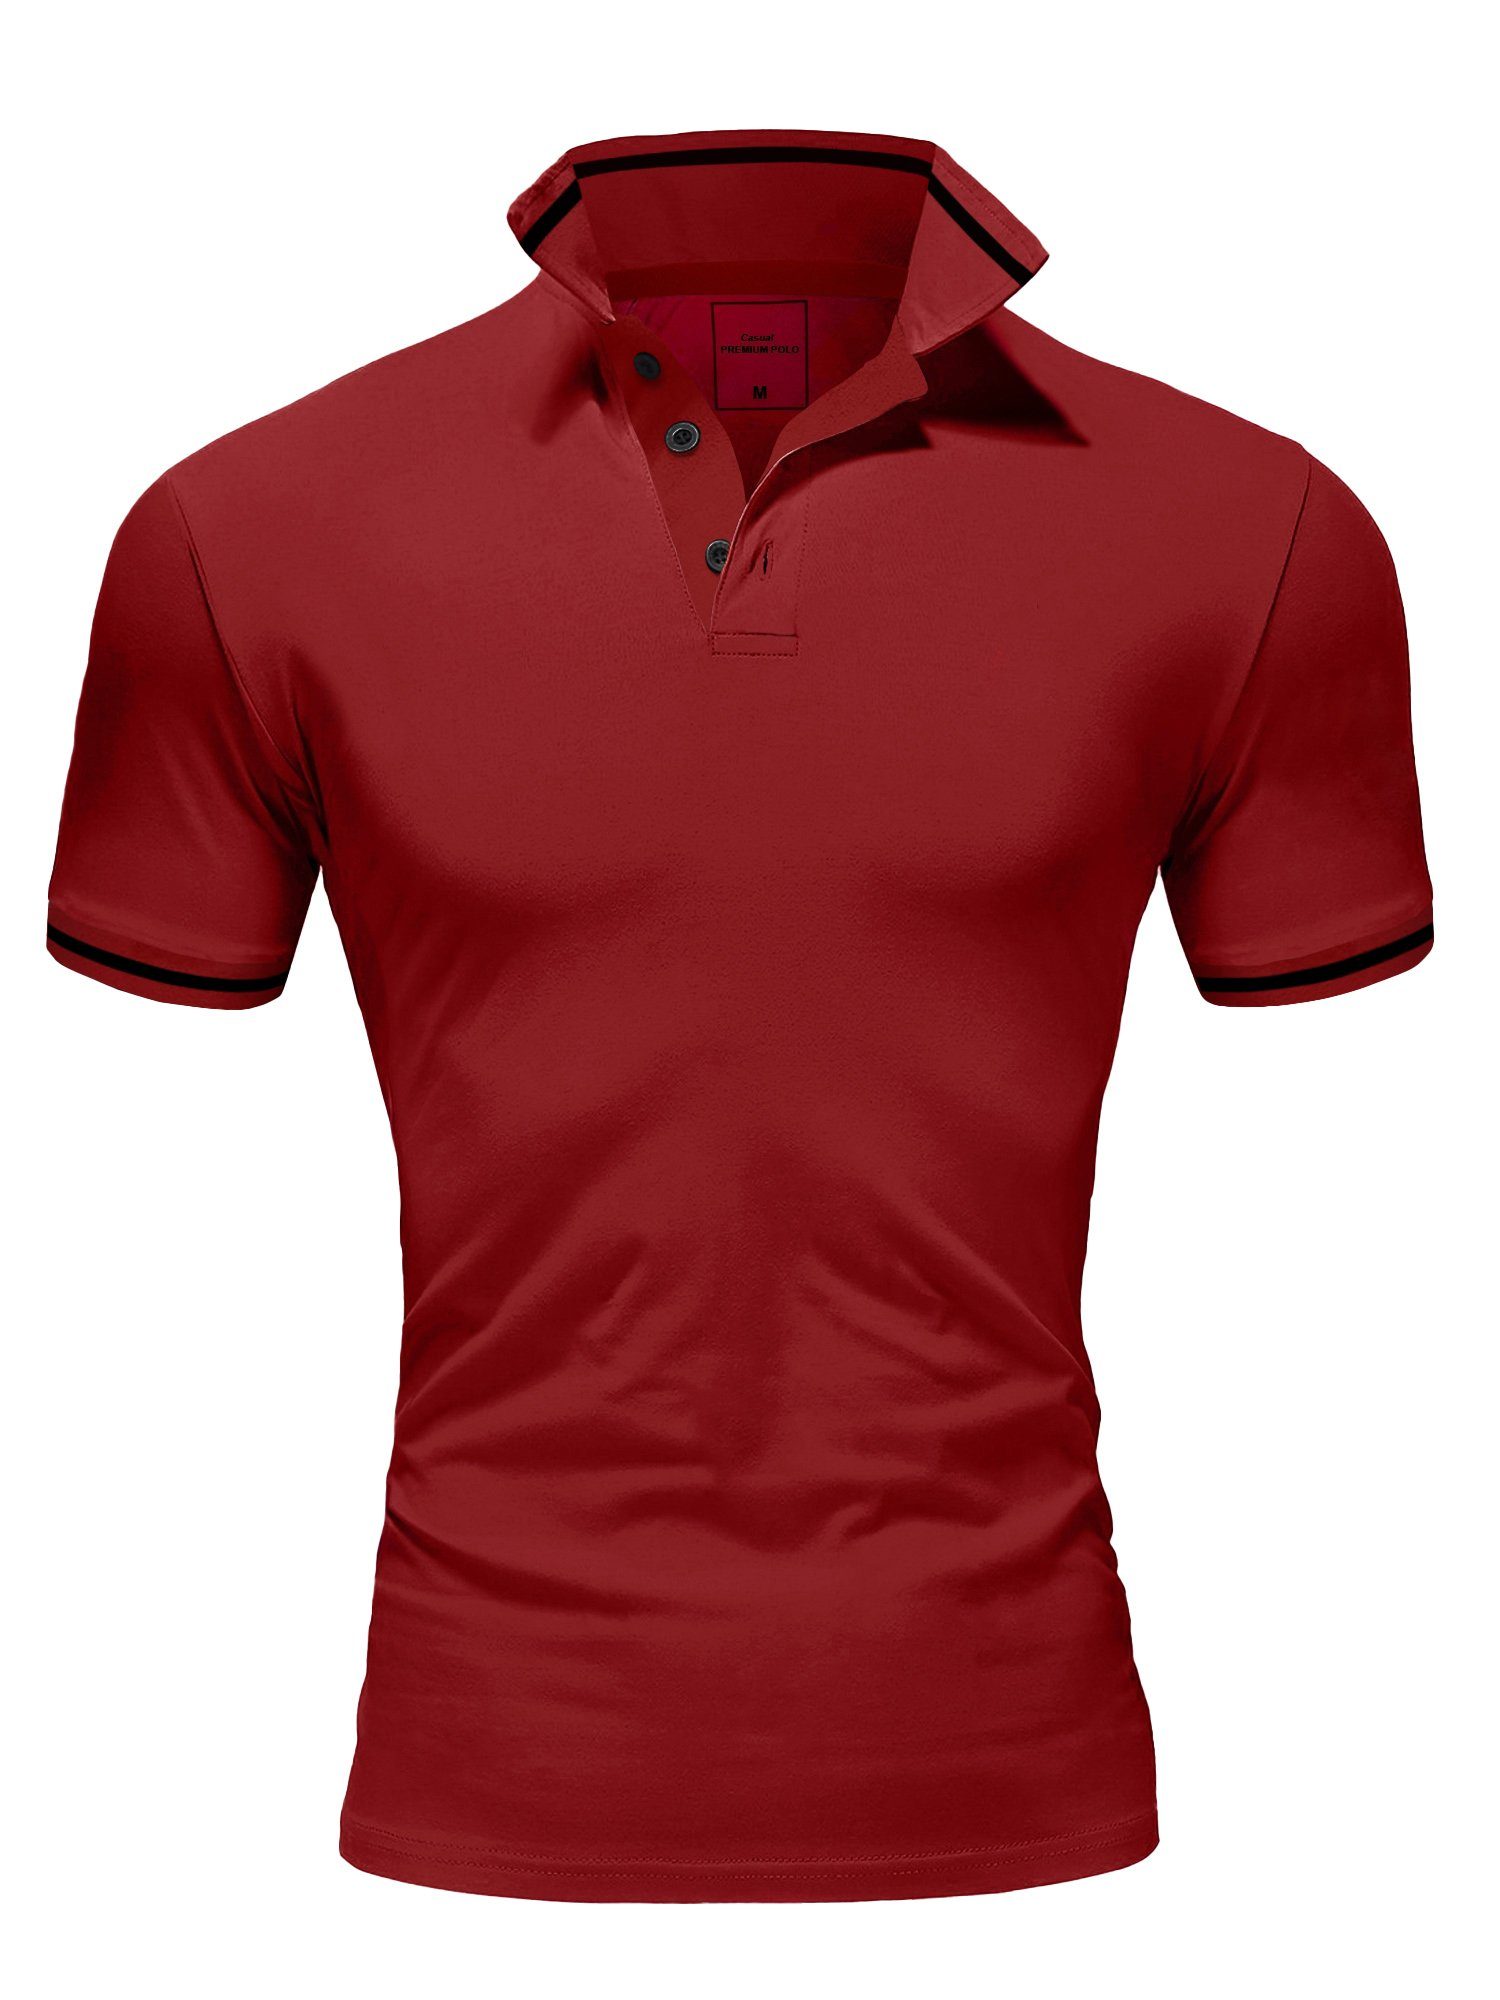 Amaci&Sons Poloshirt PROVIDENCE Herren Basic Kontrast Kurzarm Polohemd T-Shirt Bordeaux/Schwarz